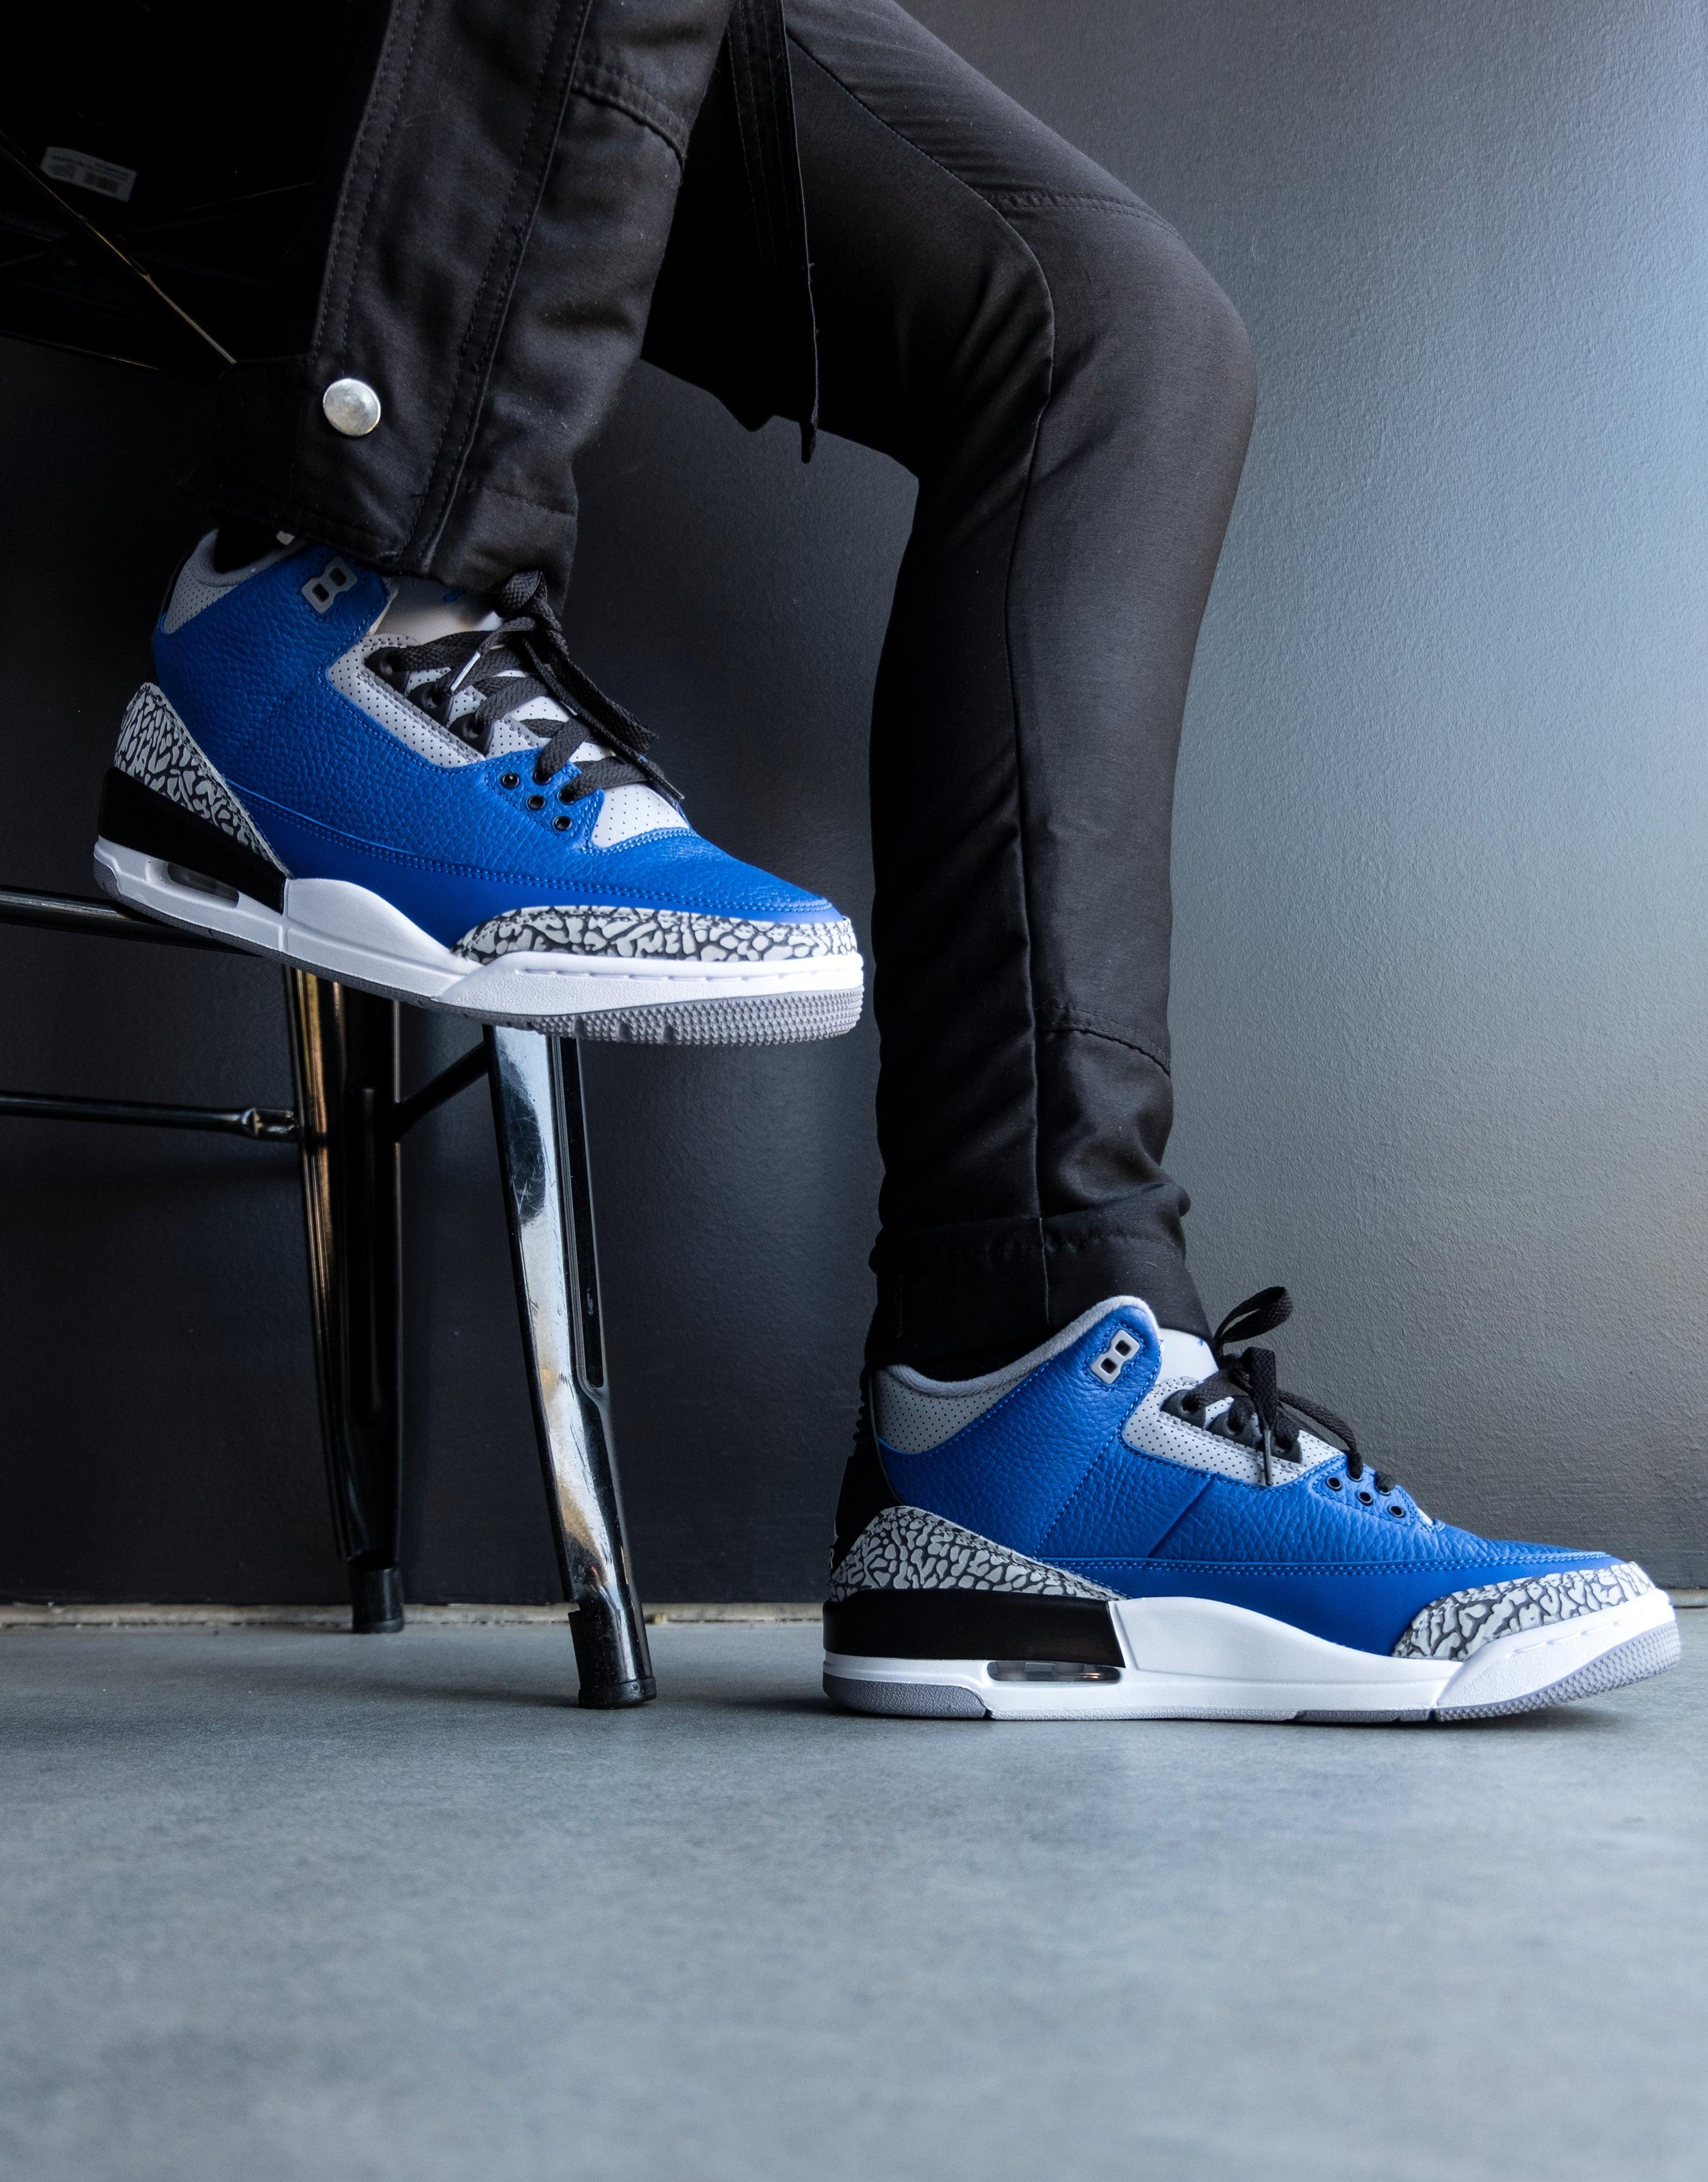 Sneakers Release Jordan 3 Retro Blue Cement Varsity Royal Cement Grey Men S Basketball Shoe